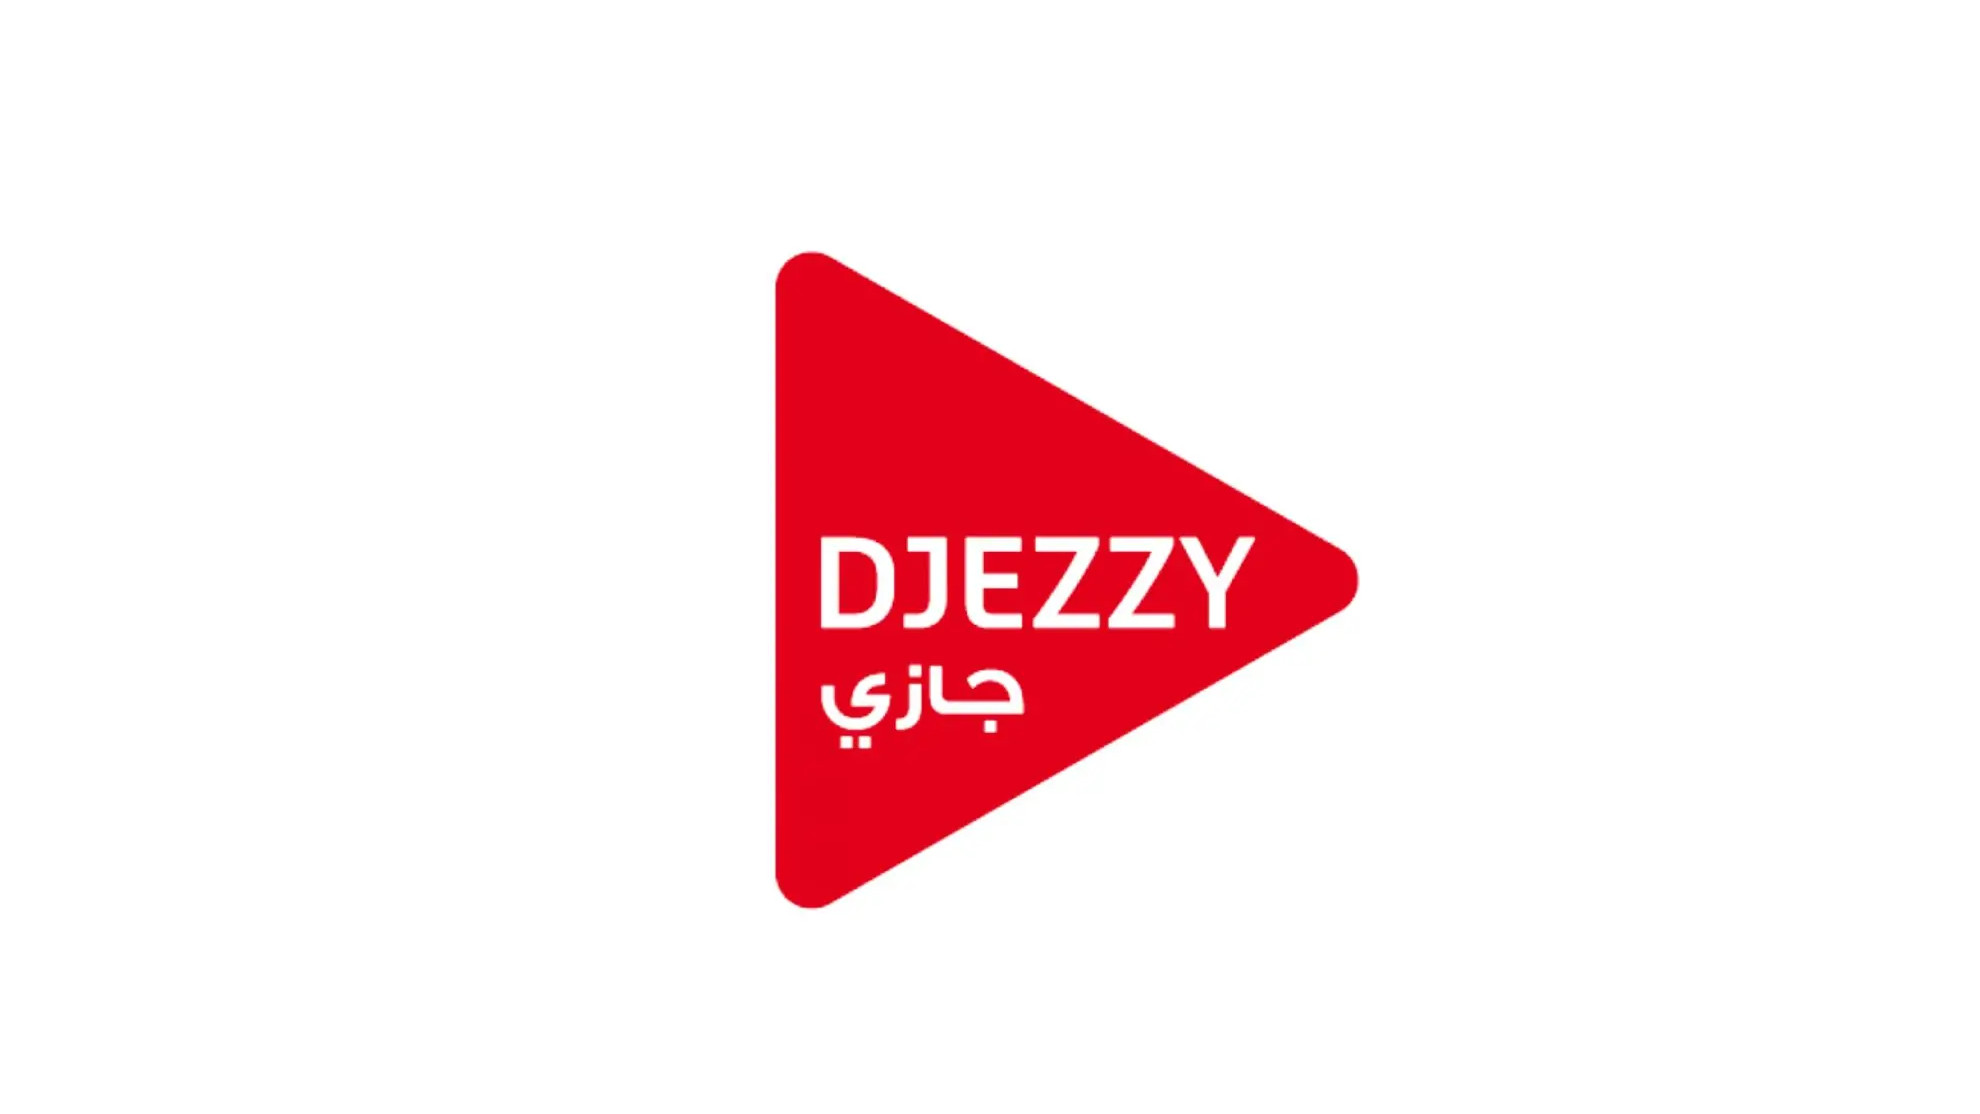 Djezzy 100 DZD Mobile Top-up DZ, 1.36$